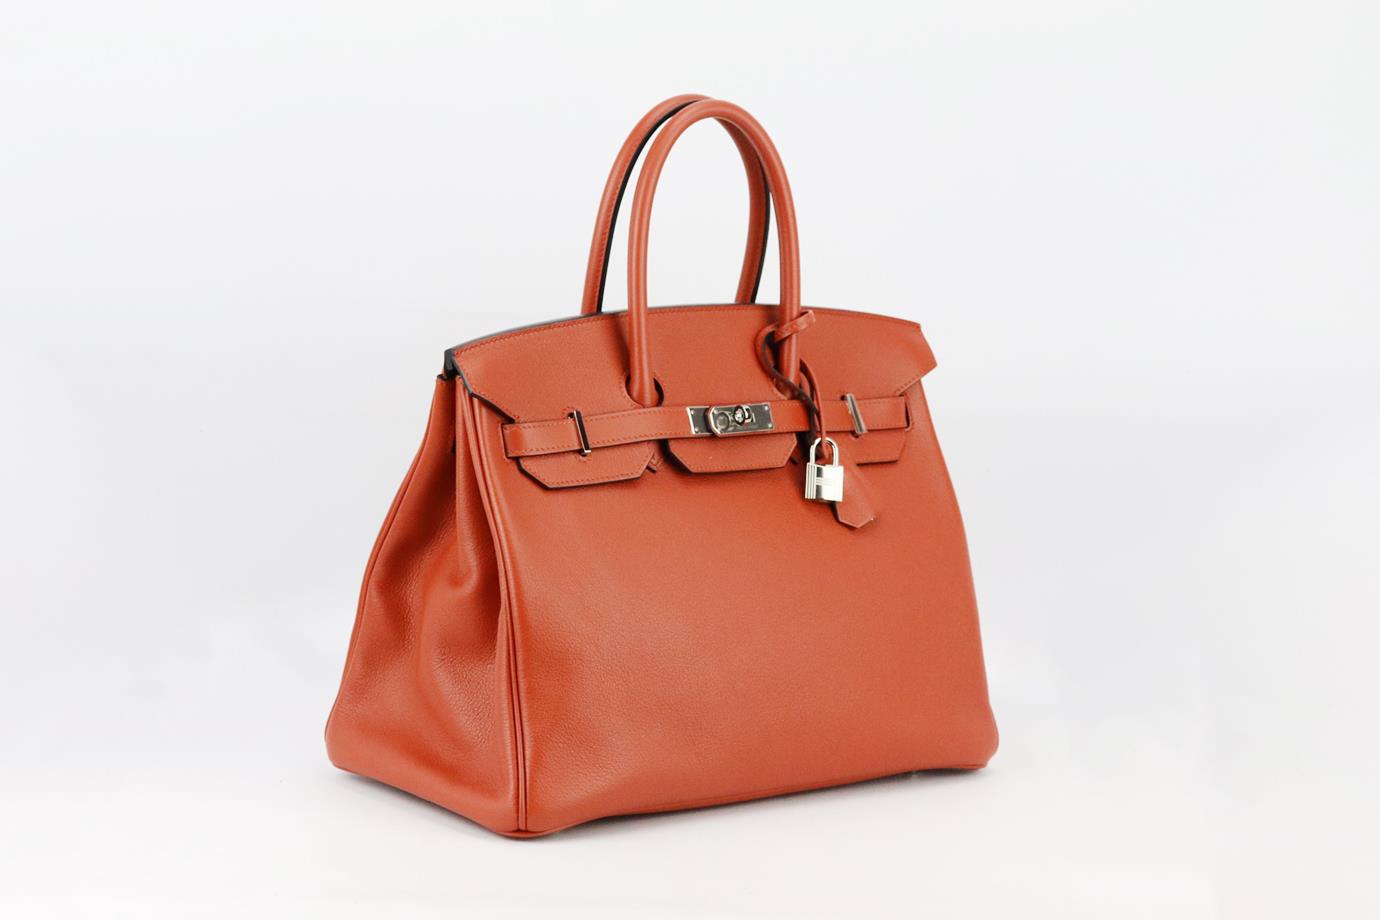 Hermès 2017 Birkin 35cm Taurillon Novillo Leather Bag